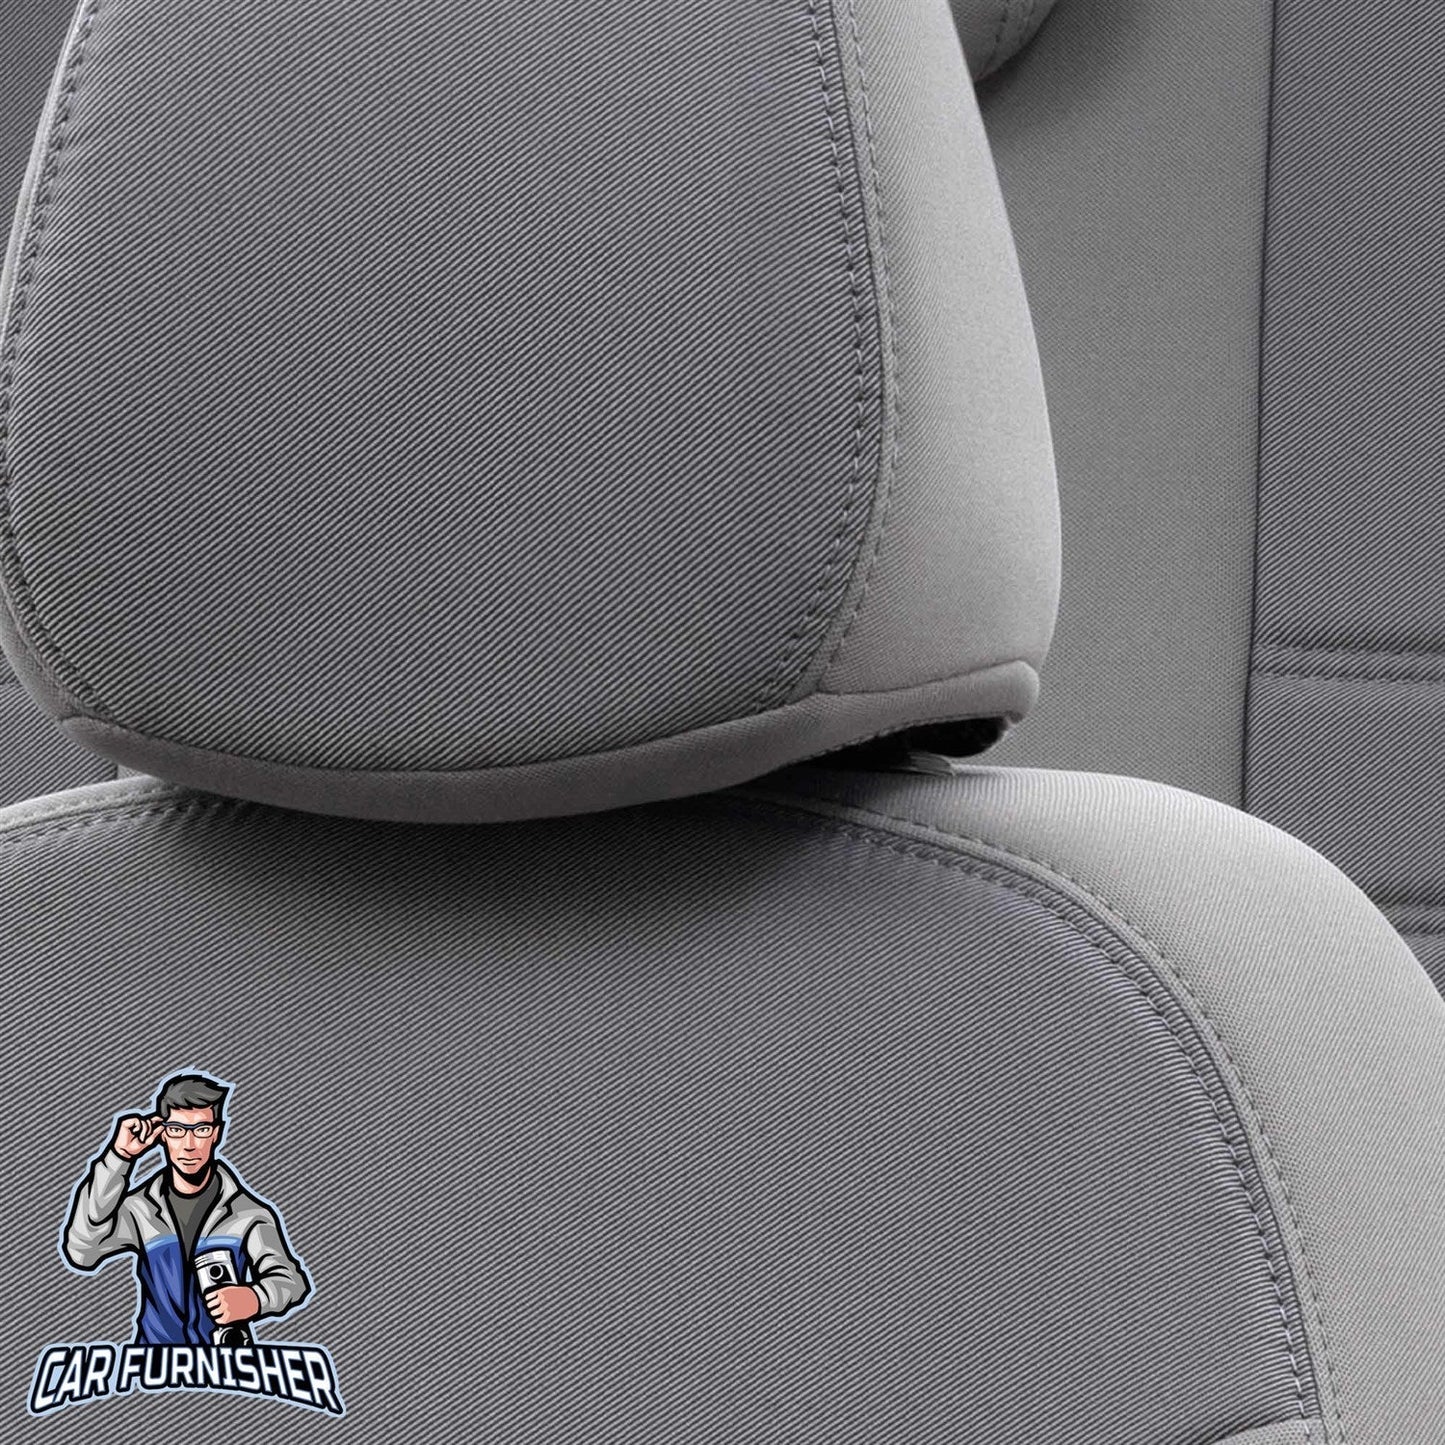 Peugeot 106 Seat Covers Original Jacquard Design Gray Jacquard Fabric